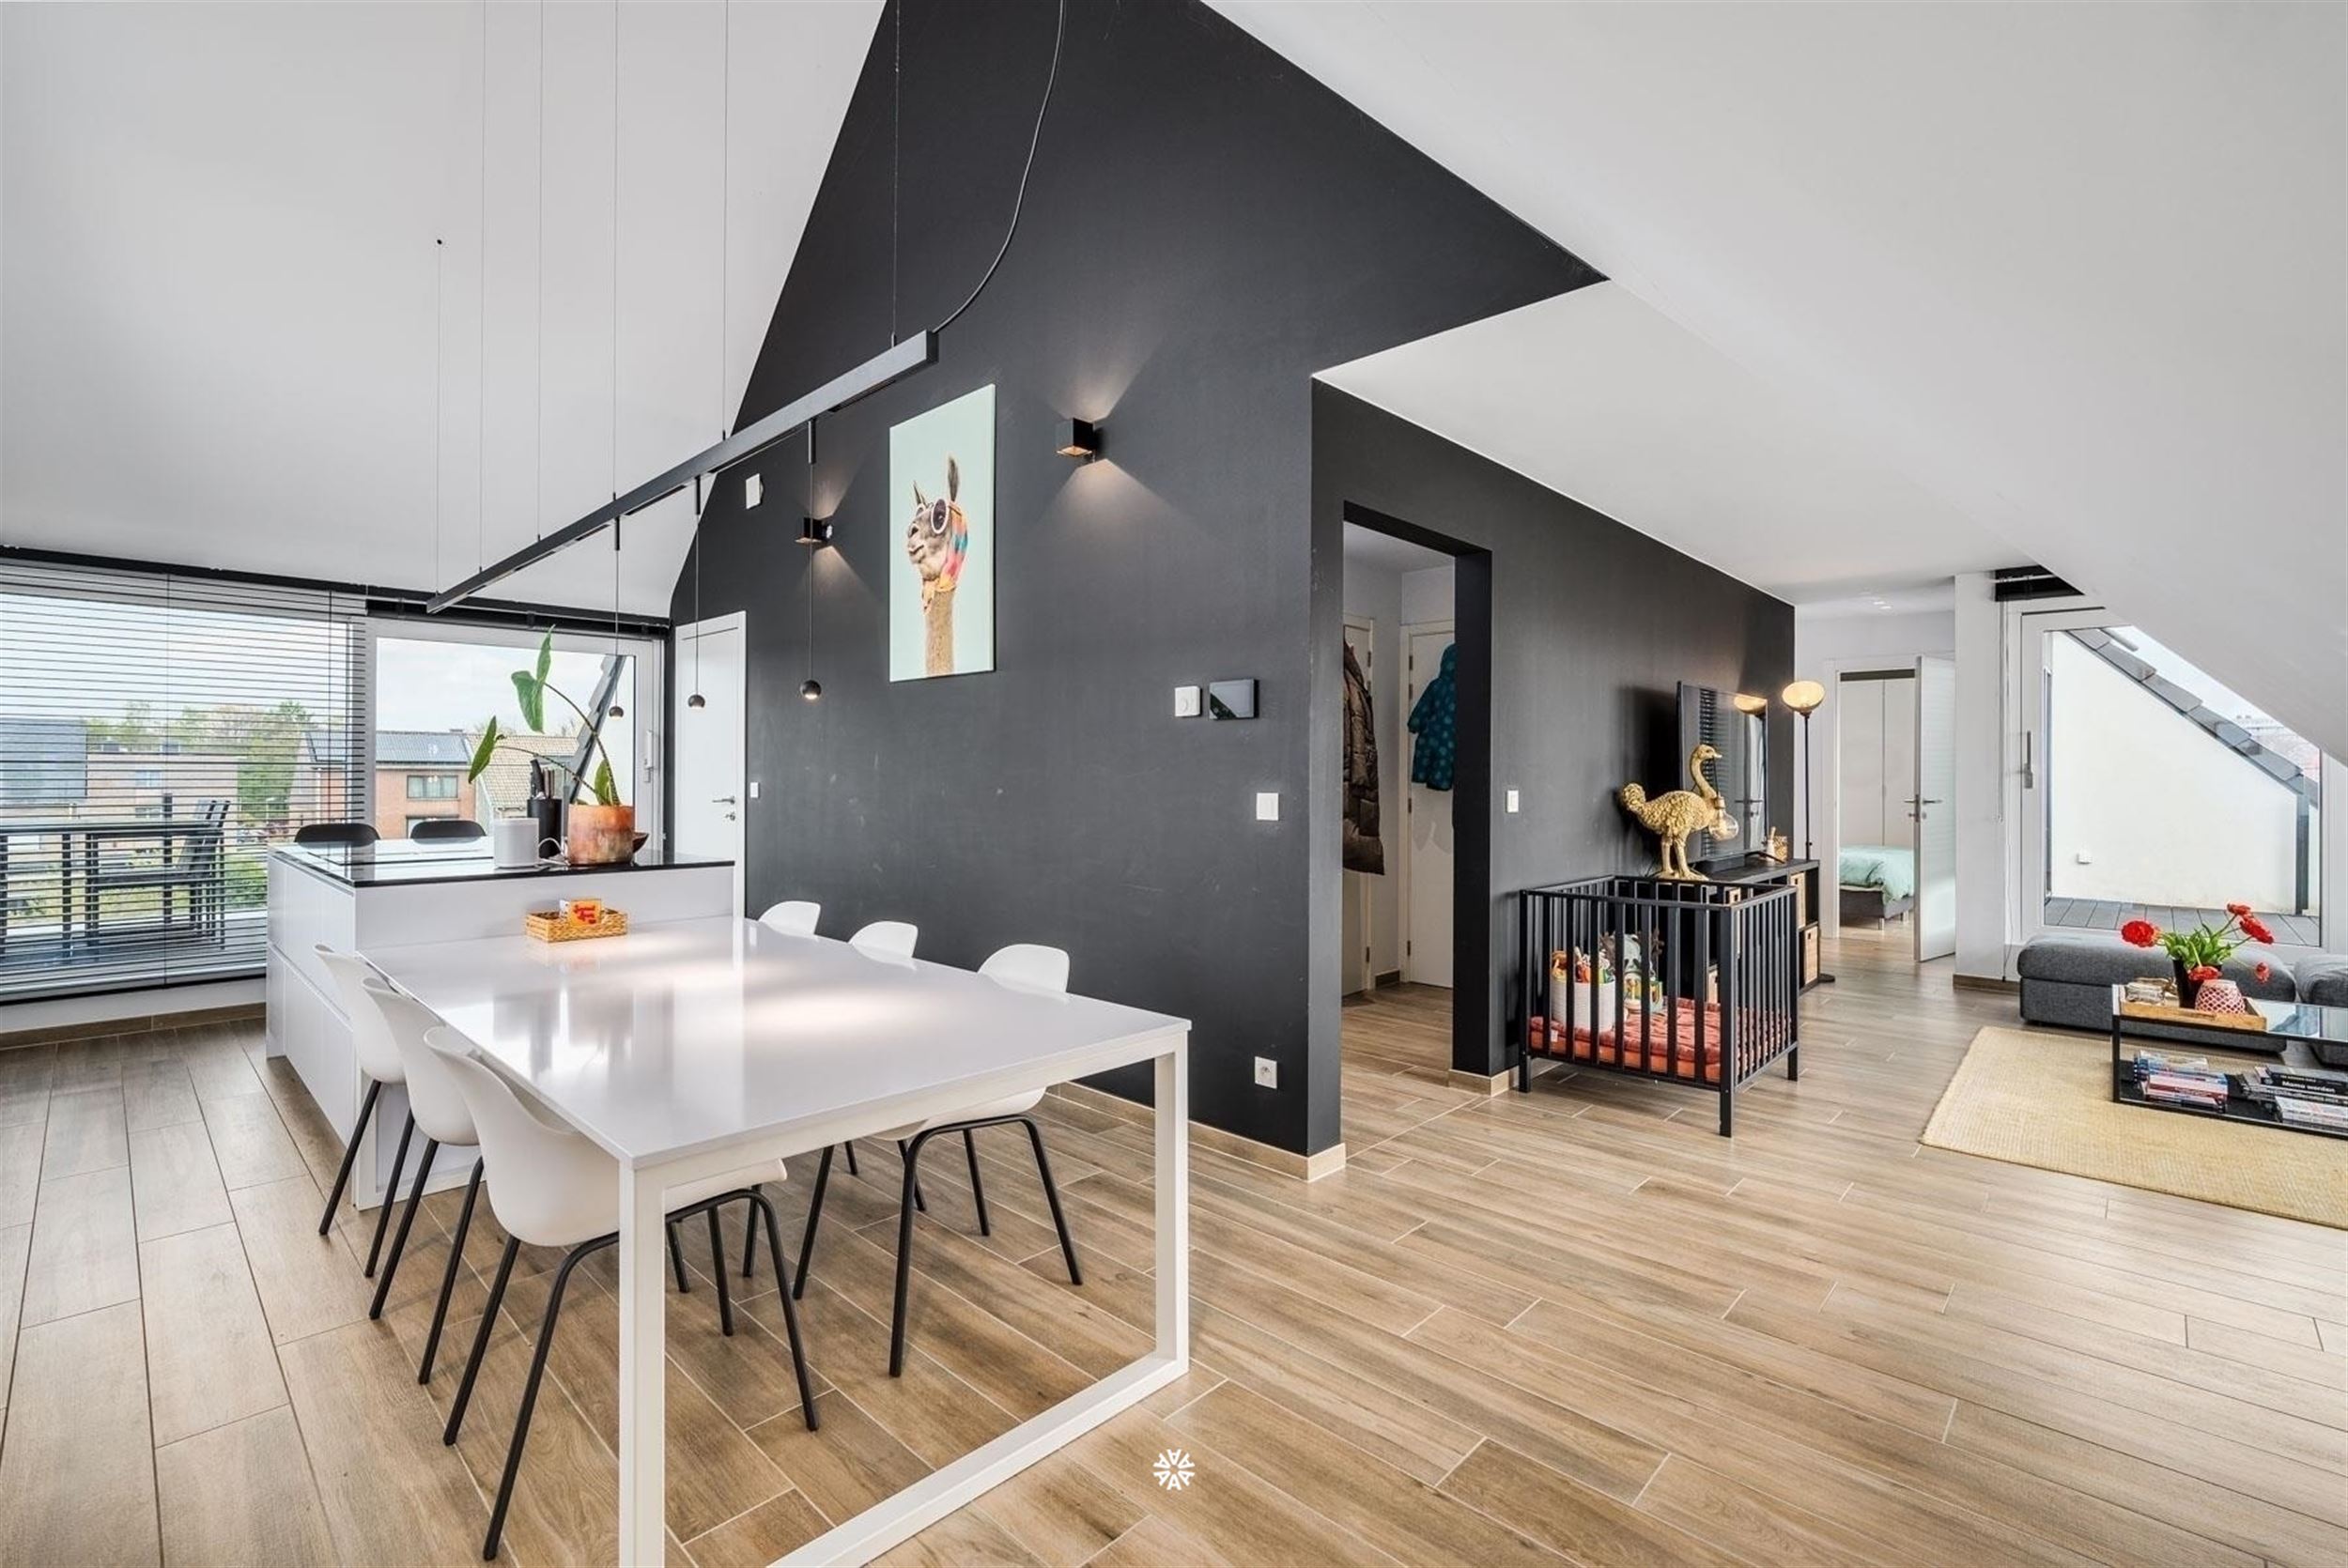 Sint-Niklaas - Luxe penthouse appartement met dubbele garage. foto 1